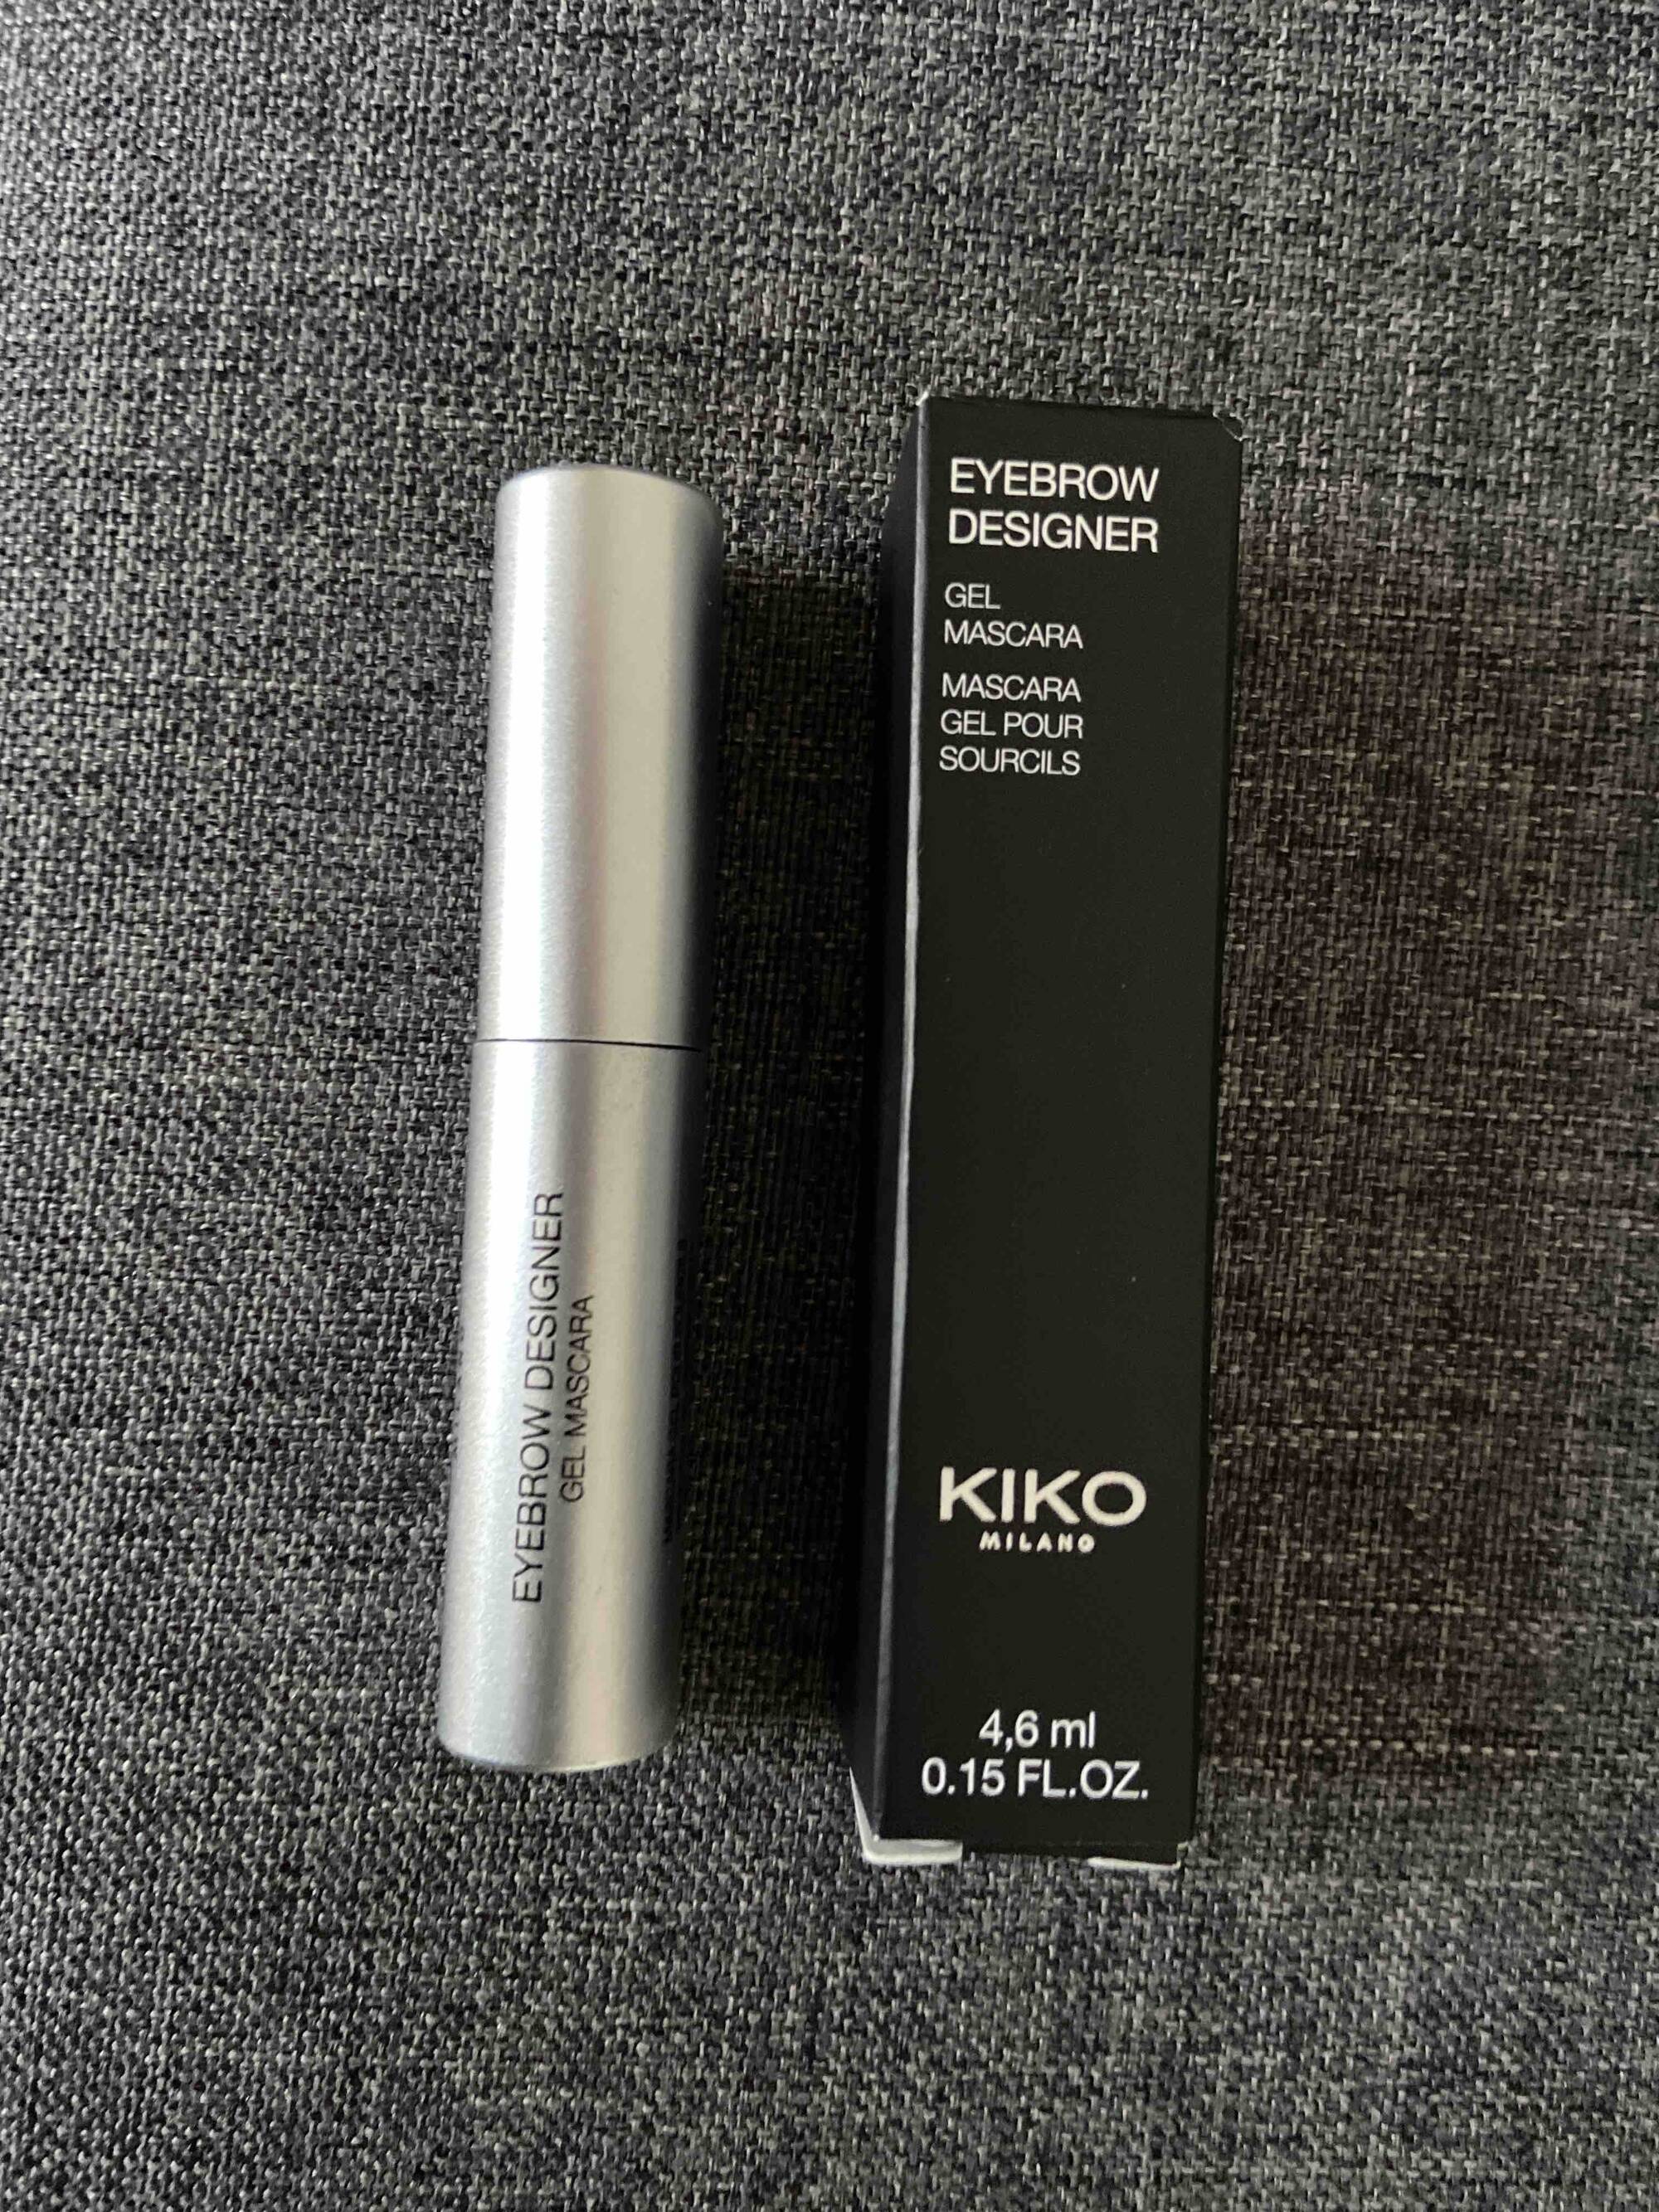 KIKO COSMETICS - Eyebrow designer - Mascara gel pour sourcils